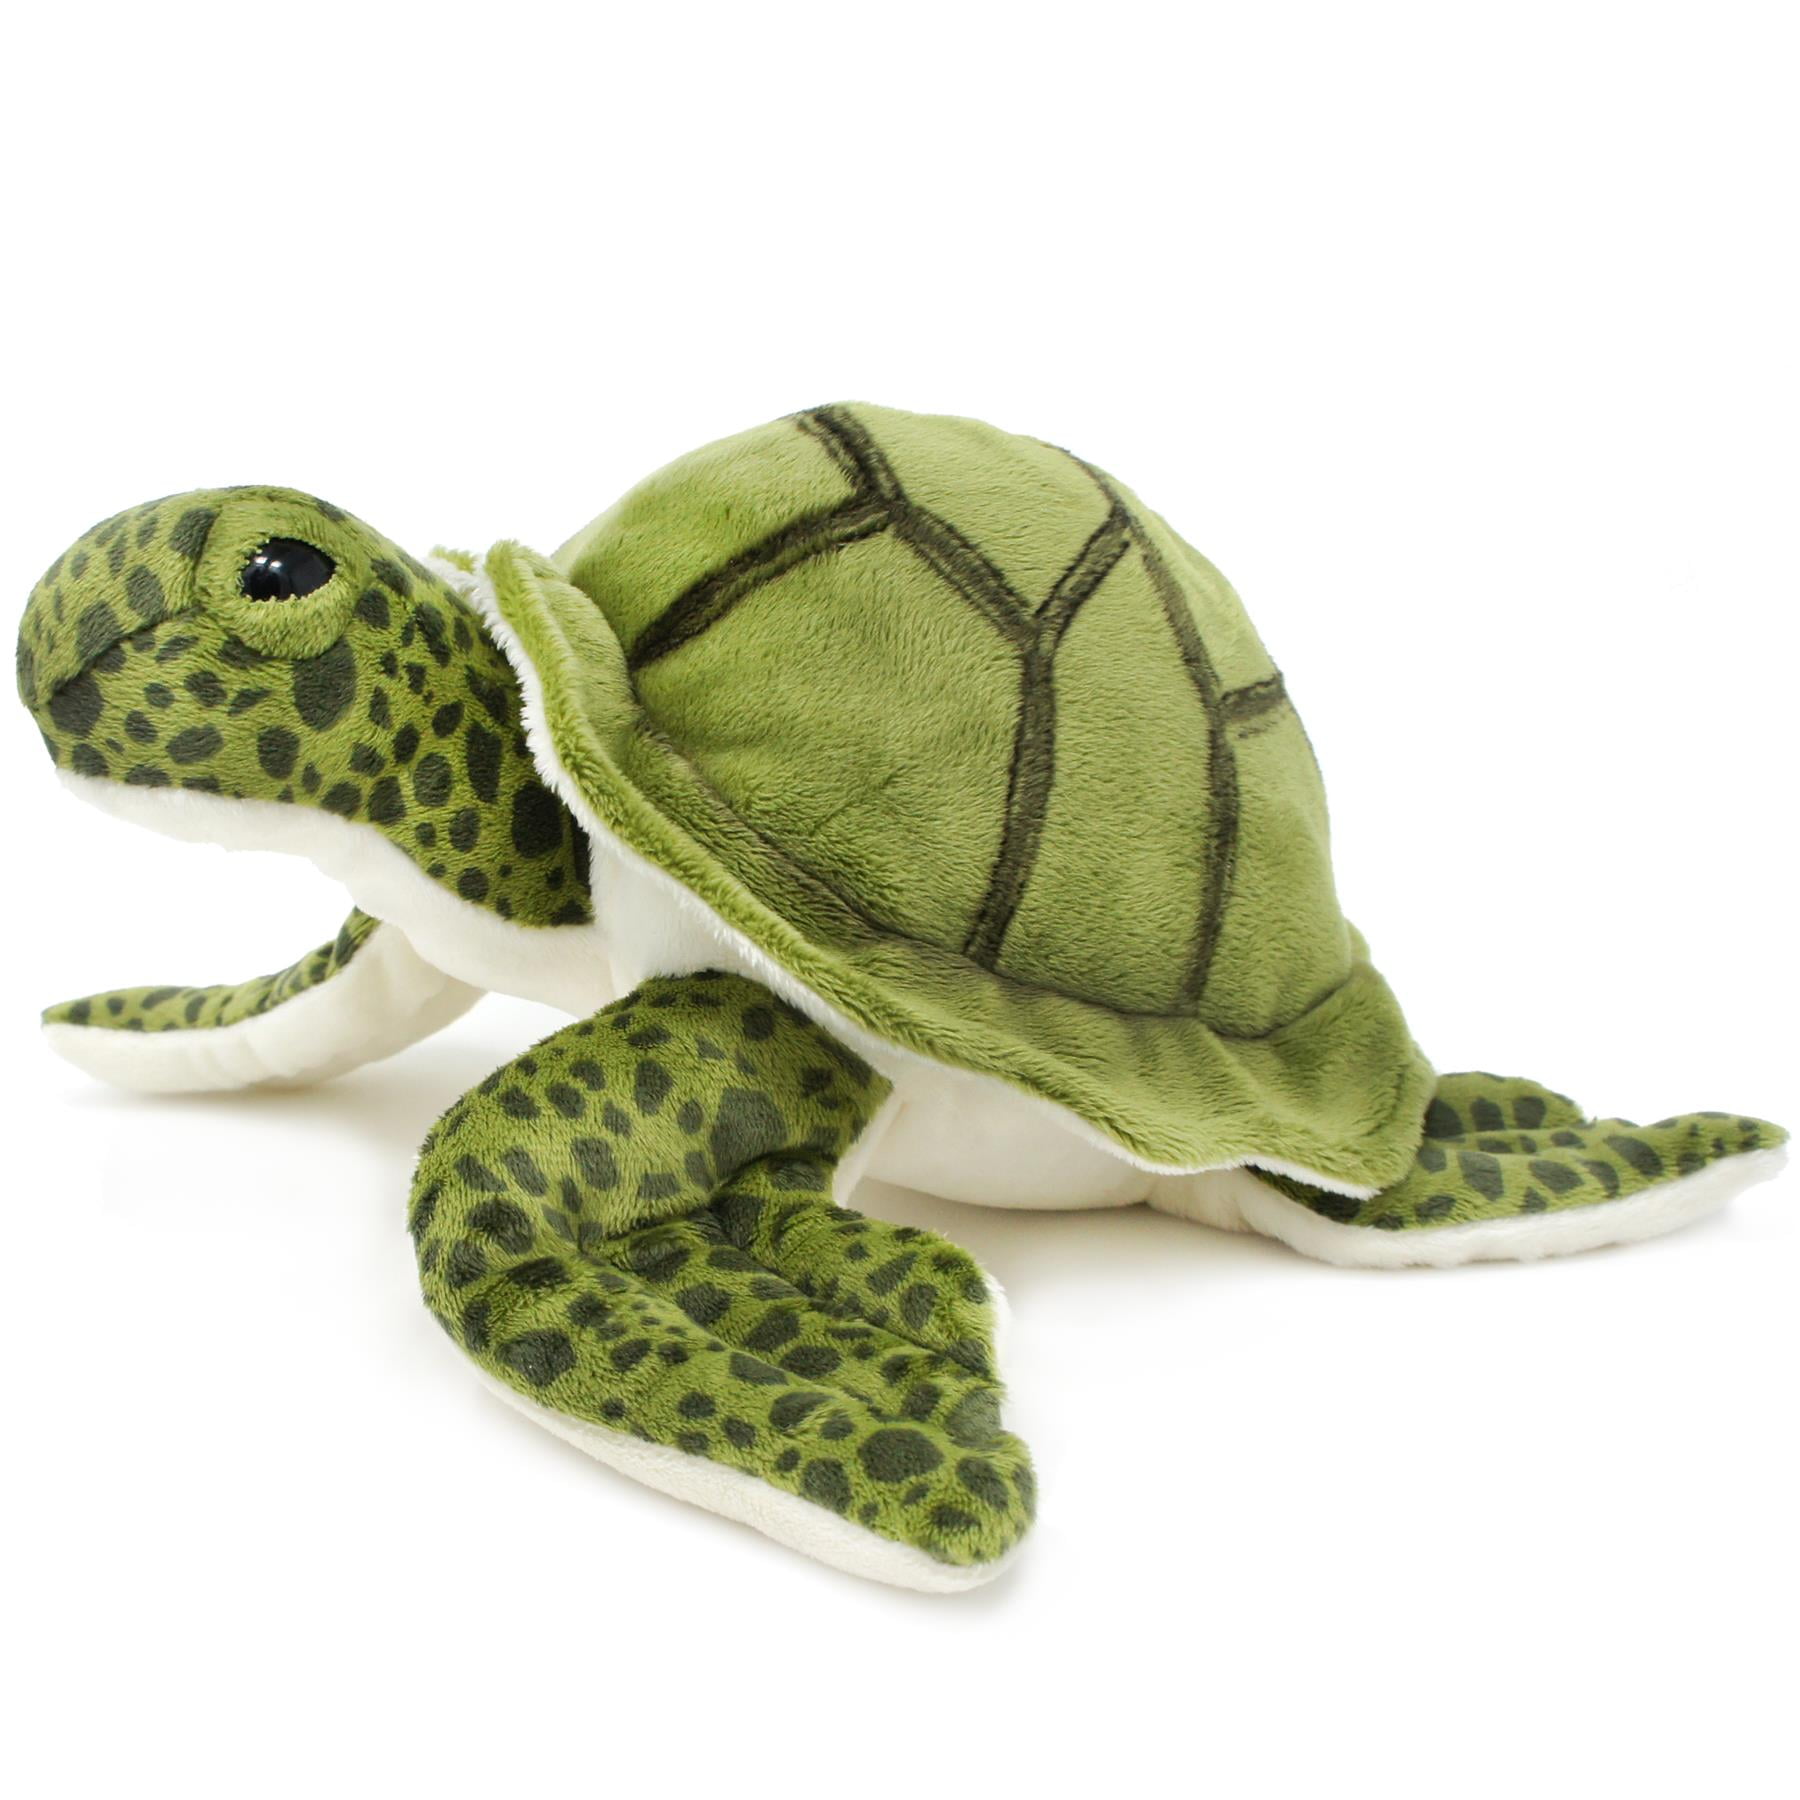 Super Green Big Eyes Stuffed Tortoise Turtle Animal Plush Baby Toy Birthday CO 